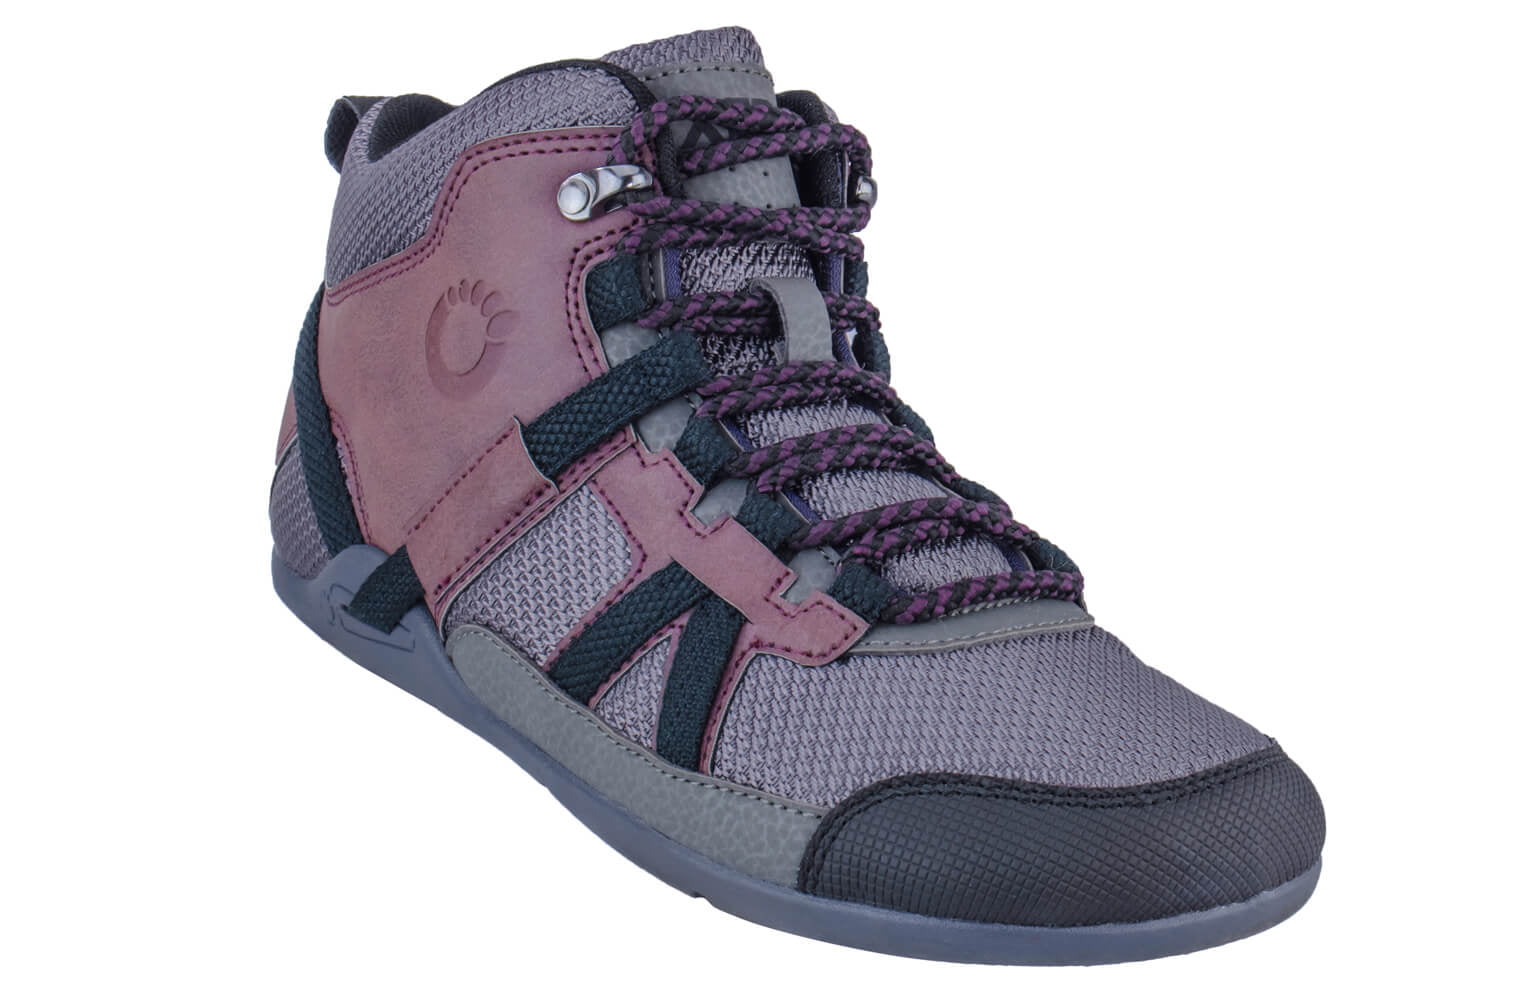 Xero Shoes - Xero Shoes DayLite Hiker - Women's Barefoot-Inspired